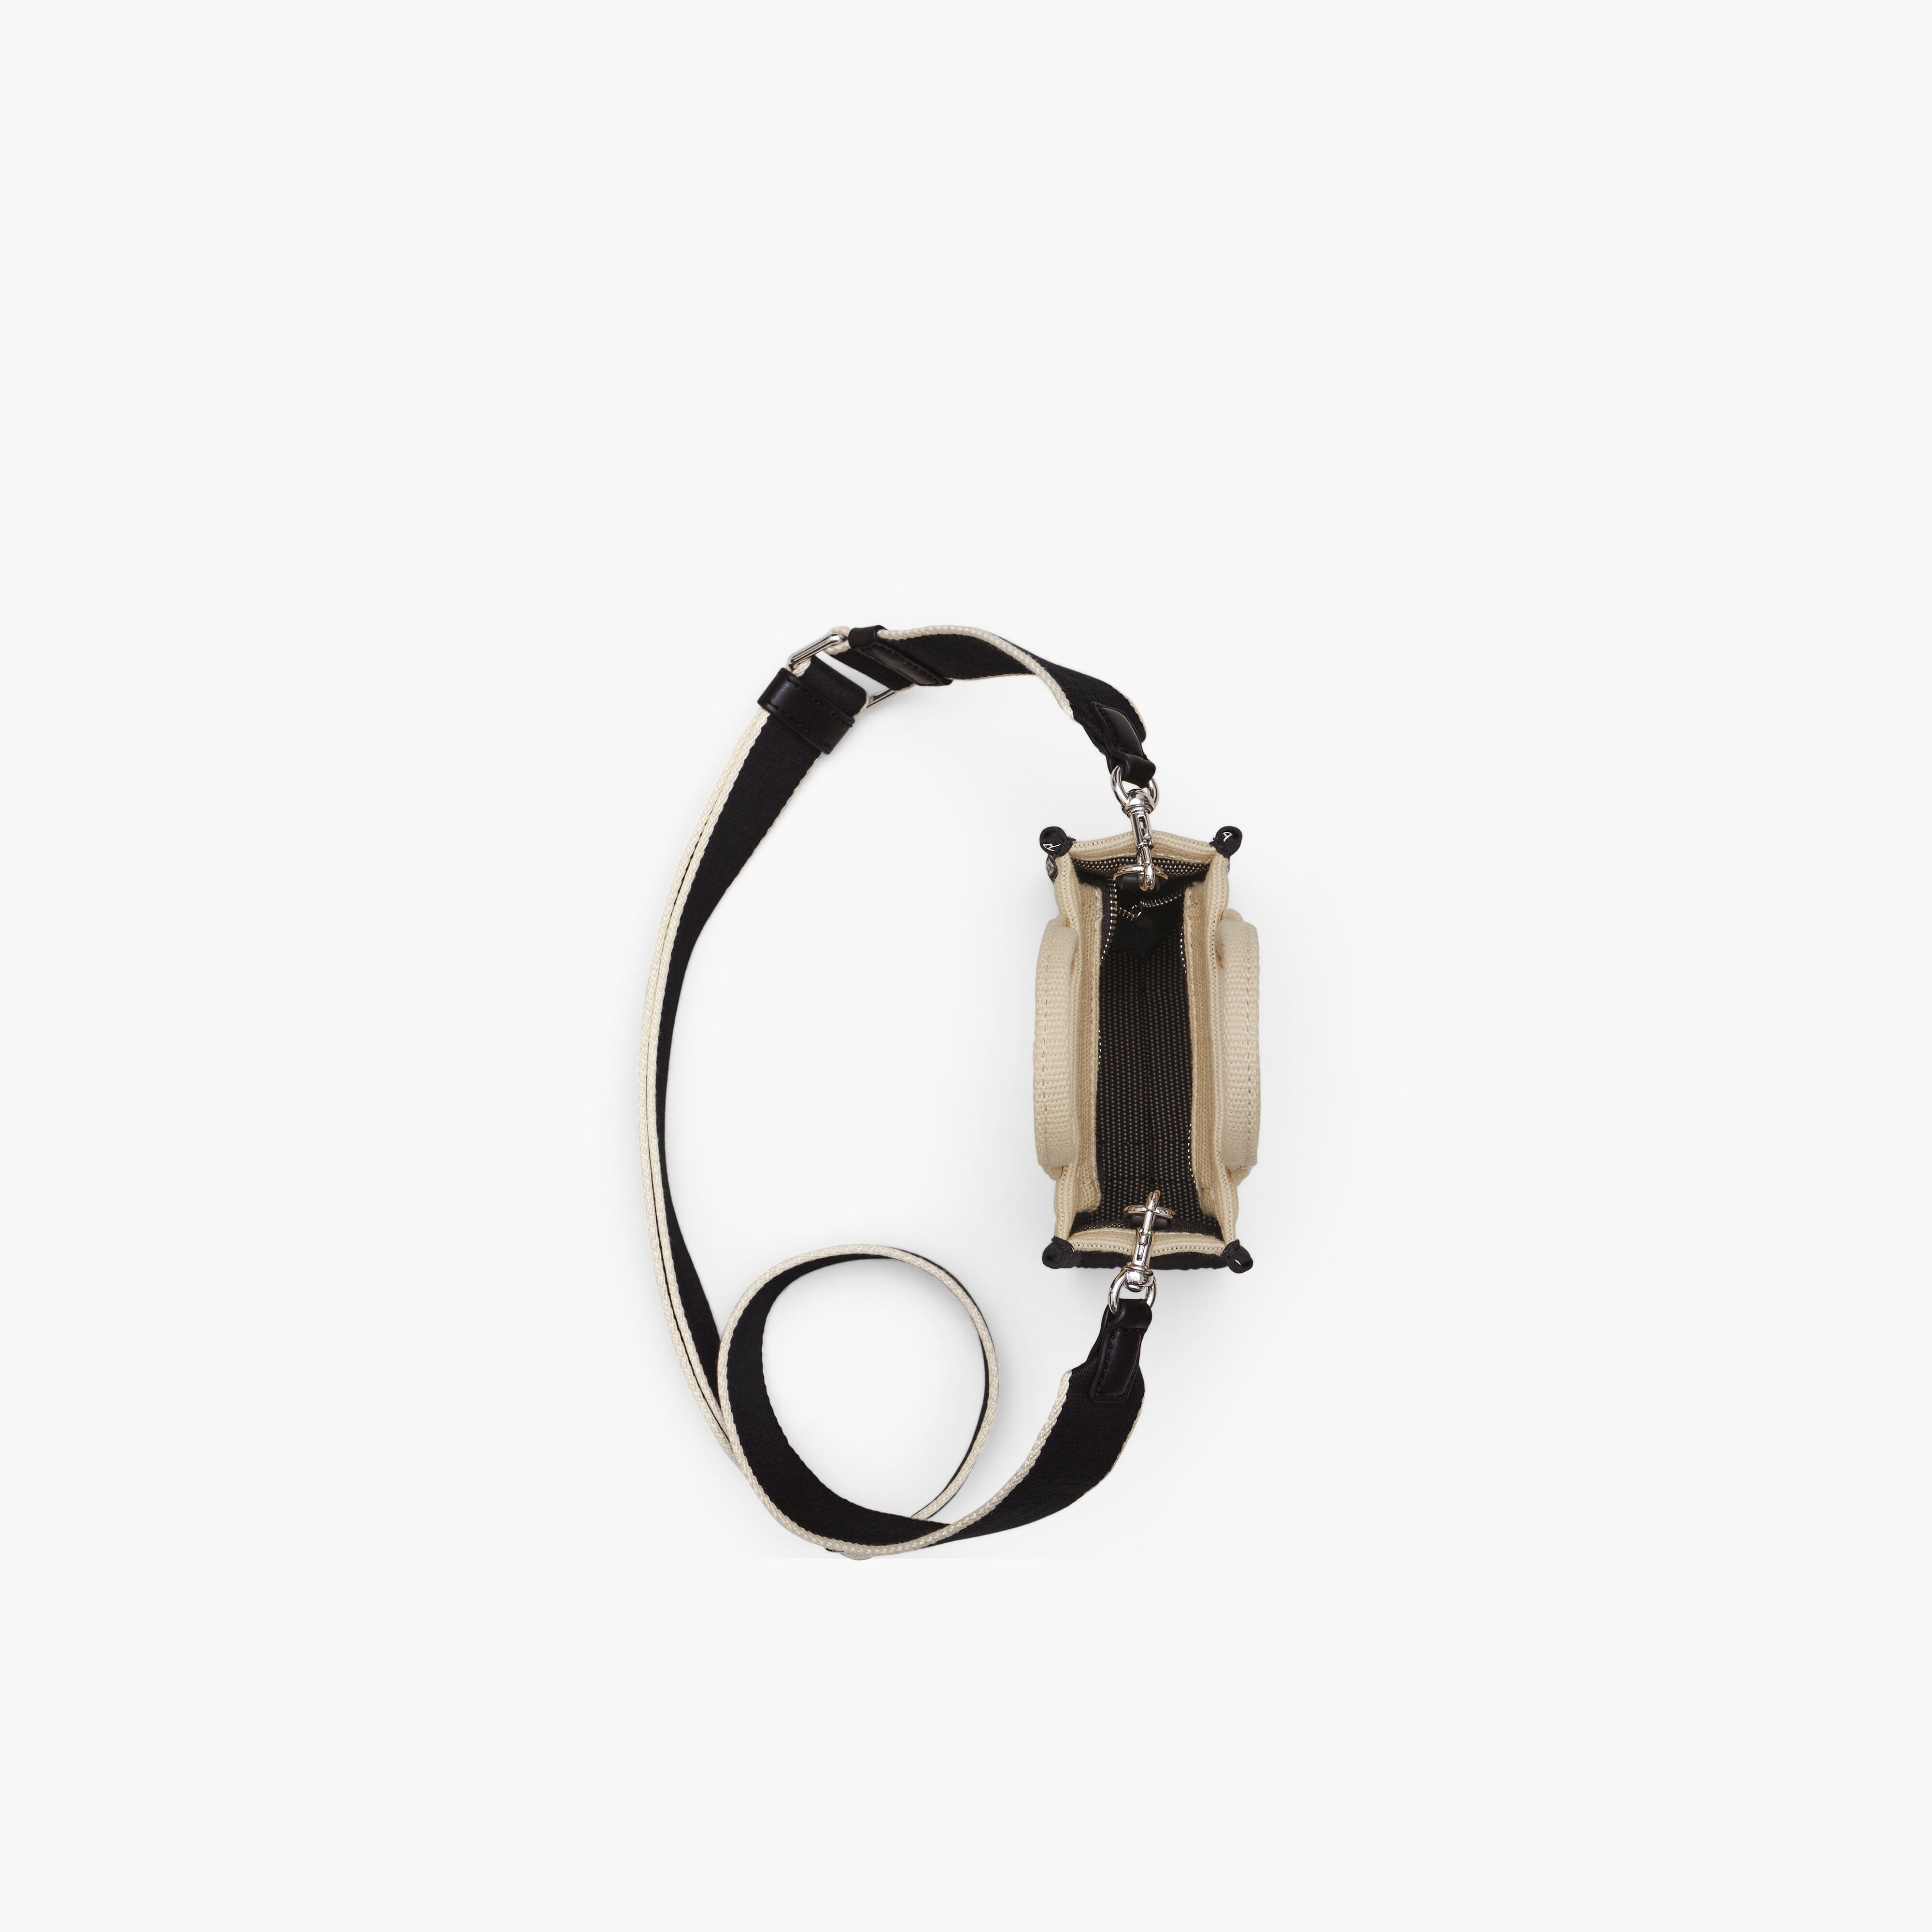 MARC JACOBS - The Phone Tote Bag - 2R3HCR027H01 - 263 - Warm Sand Borse Marc Jacobs 